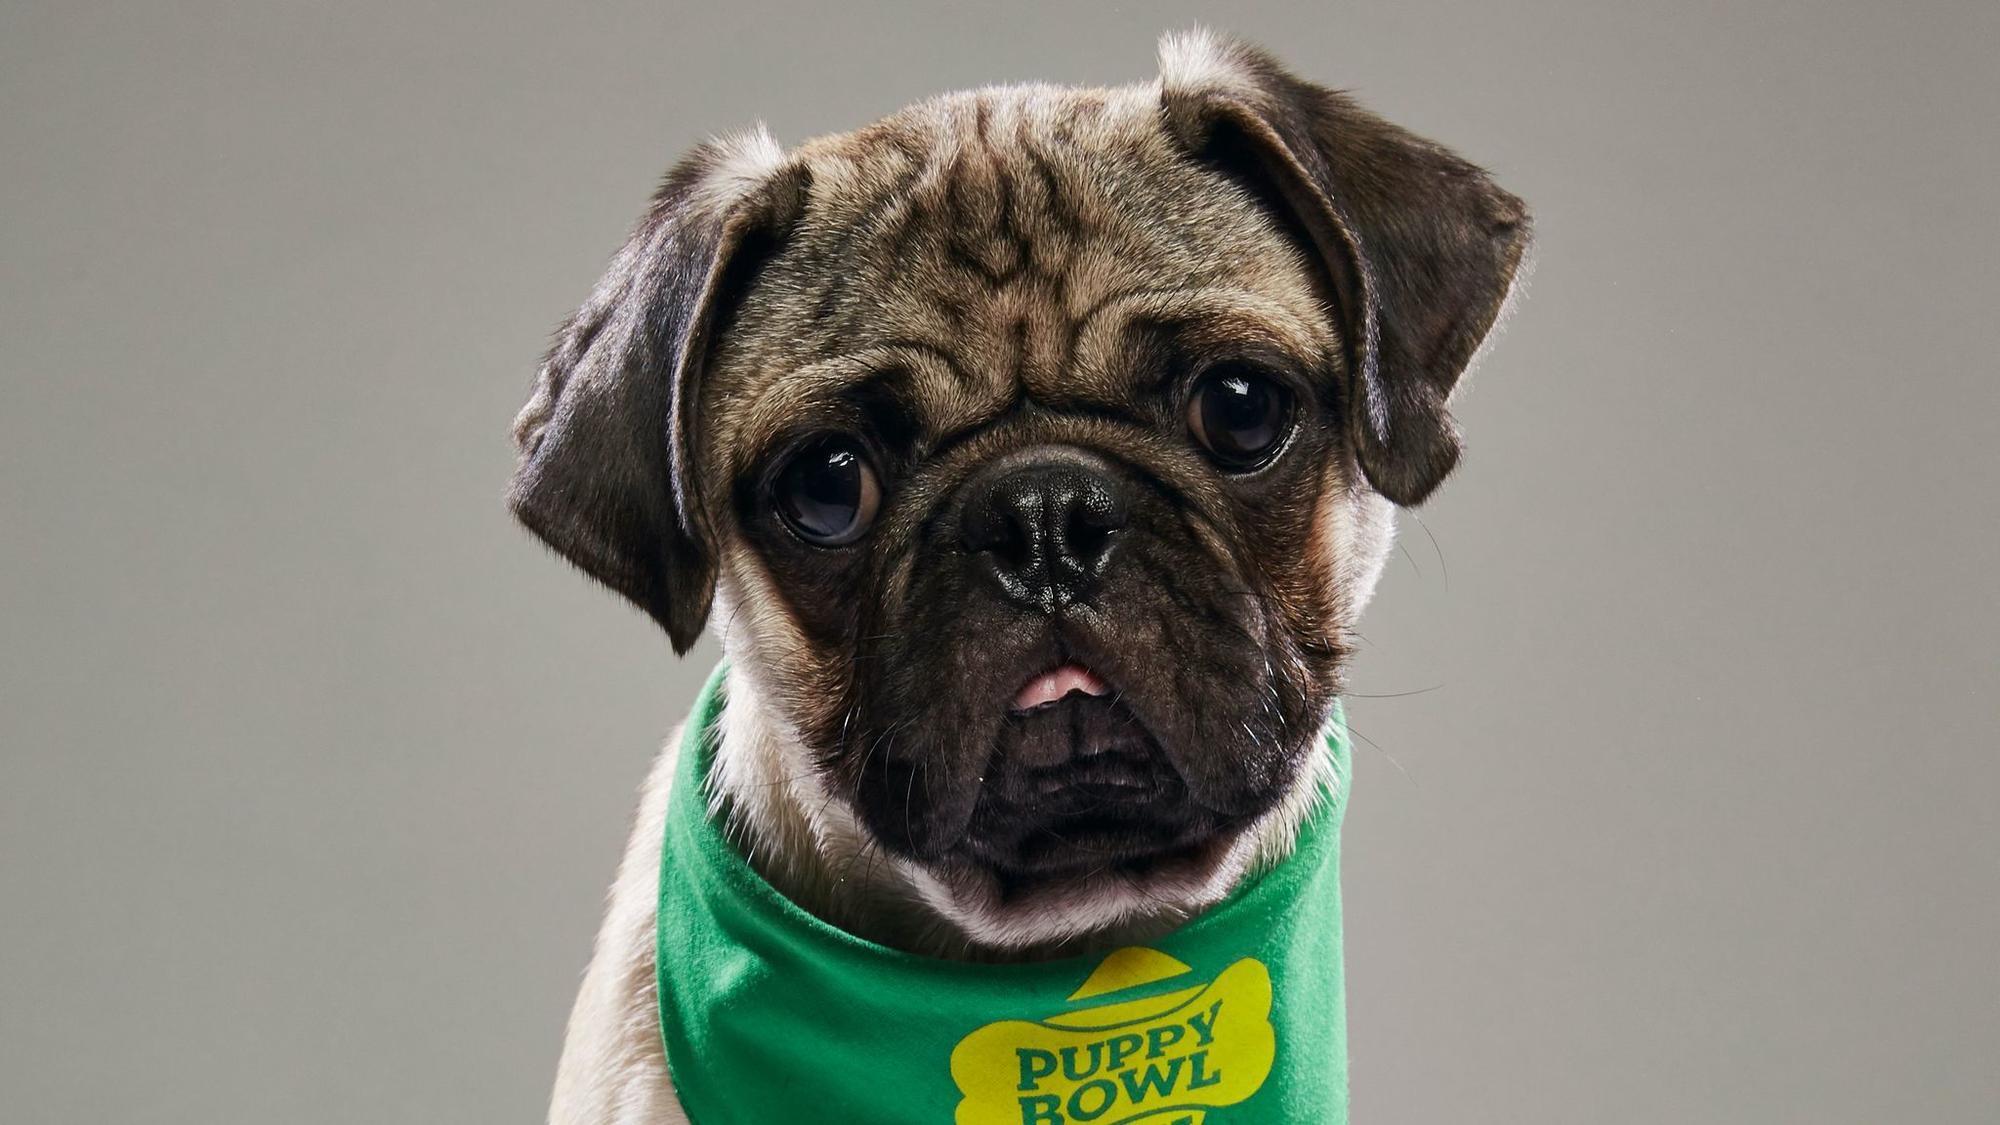 Miami pug to compete in Animal Planet's 'Puppy Bowl' - Sun Sentinel